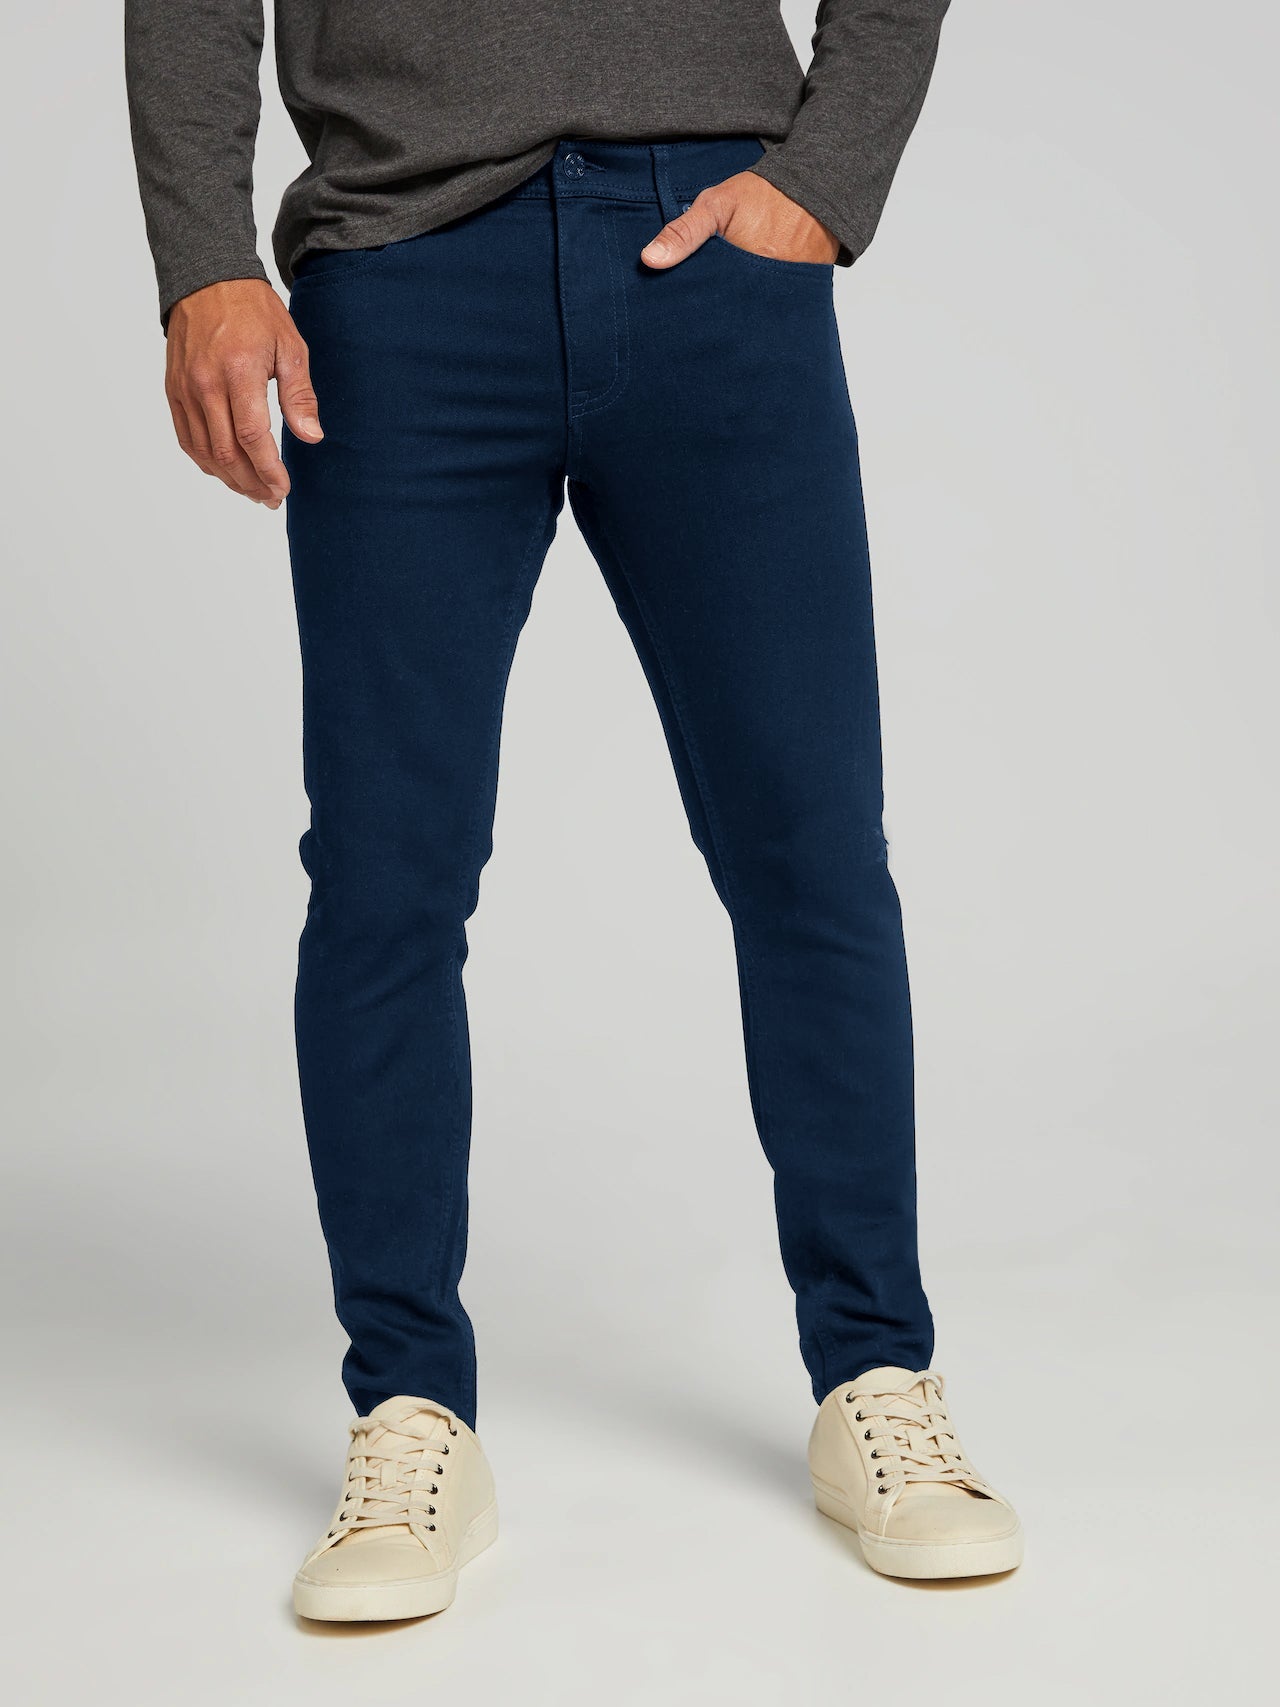 Fendi Slim Fit Stretchy Jeans Denim For Men-Blue-RT1817